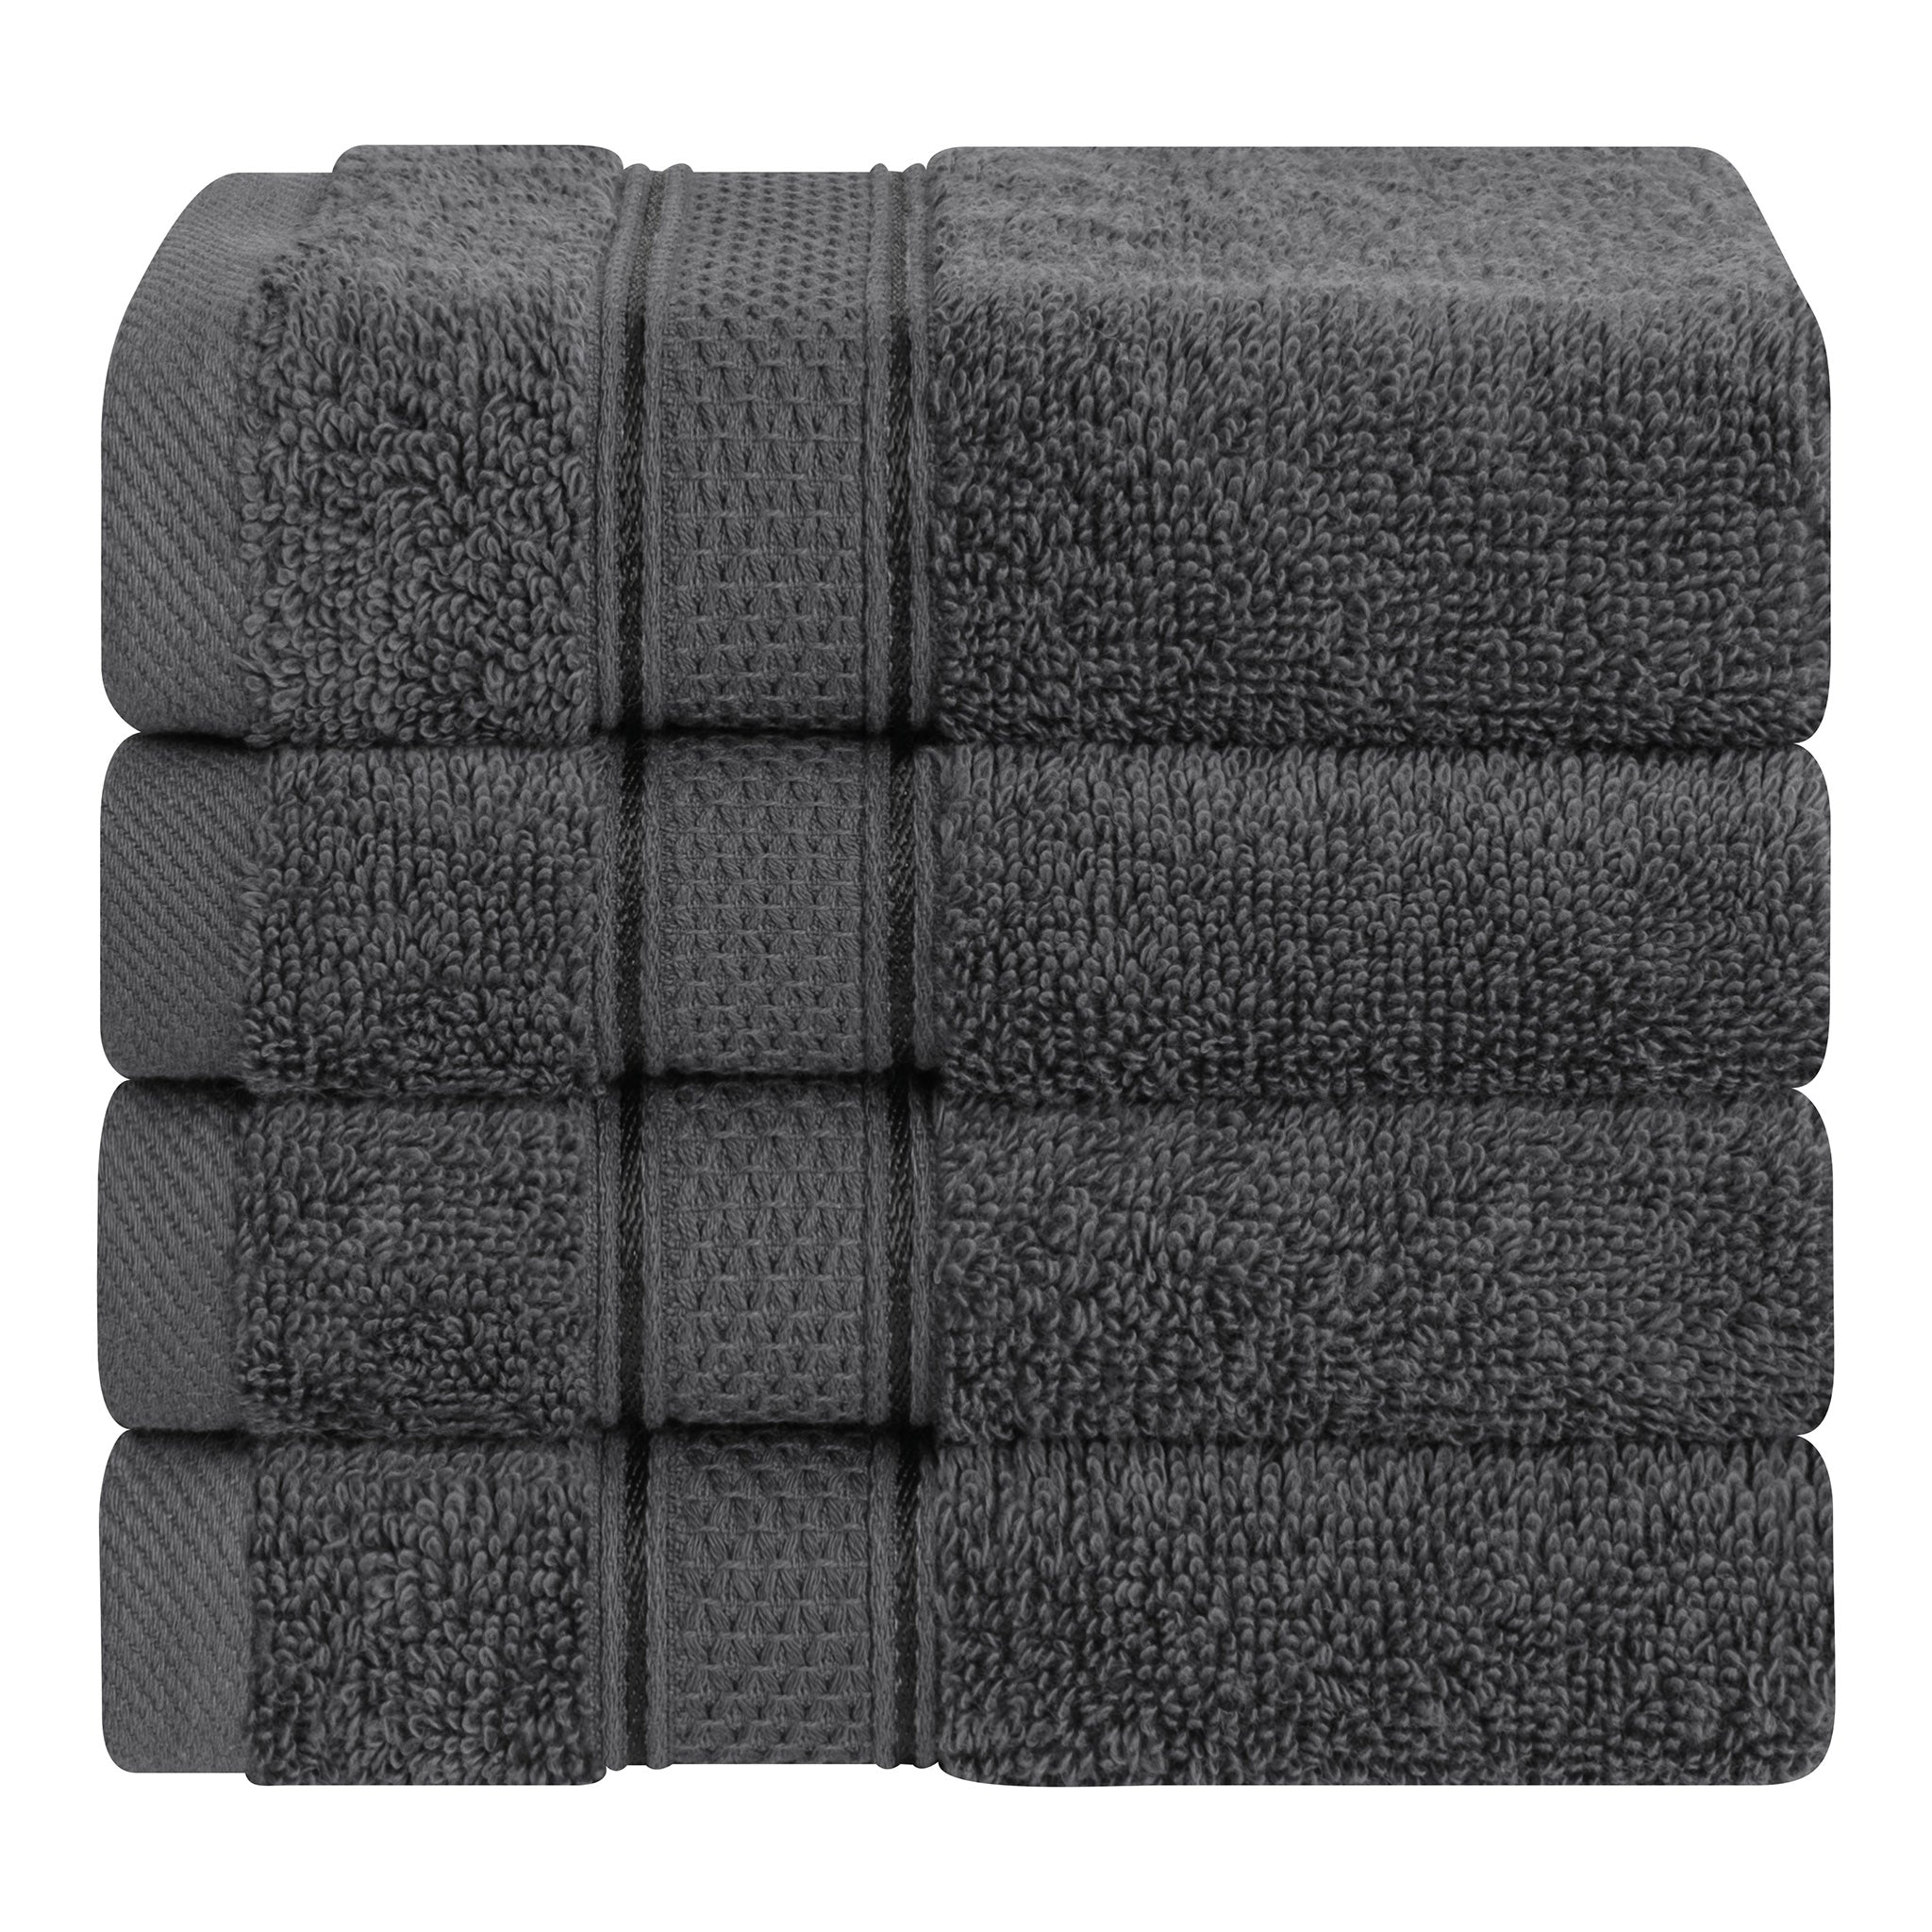 American Soft Linen Salem 100% Turkish Combed Cotton Luxury 4 Piece Washcloth Set -gray-1